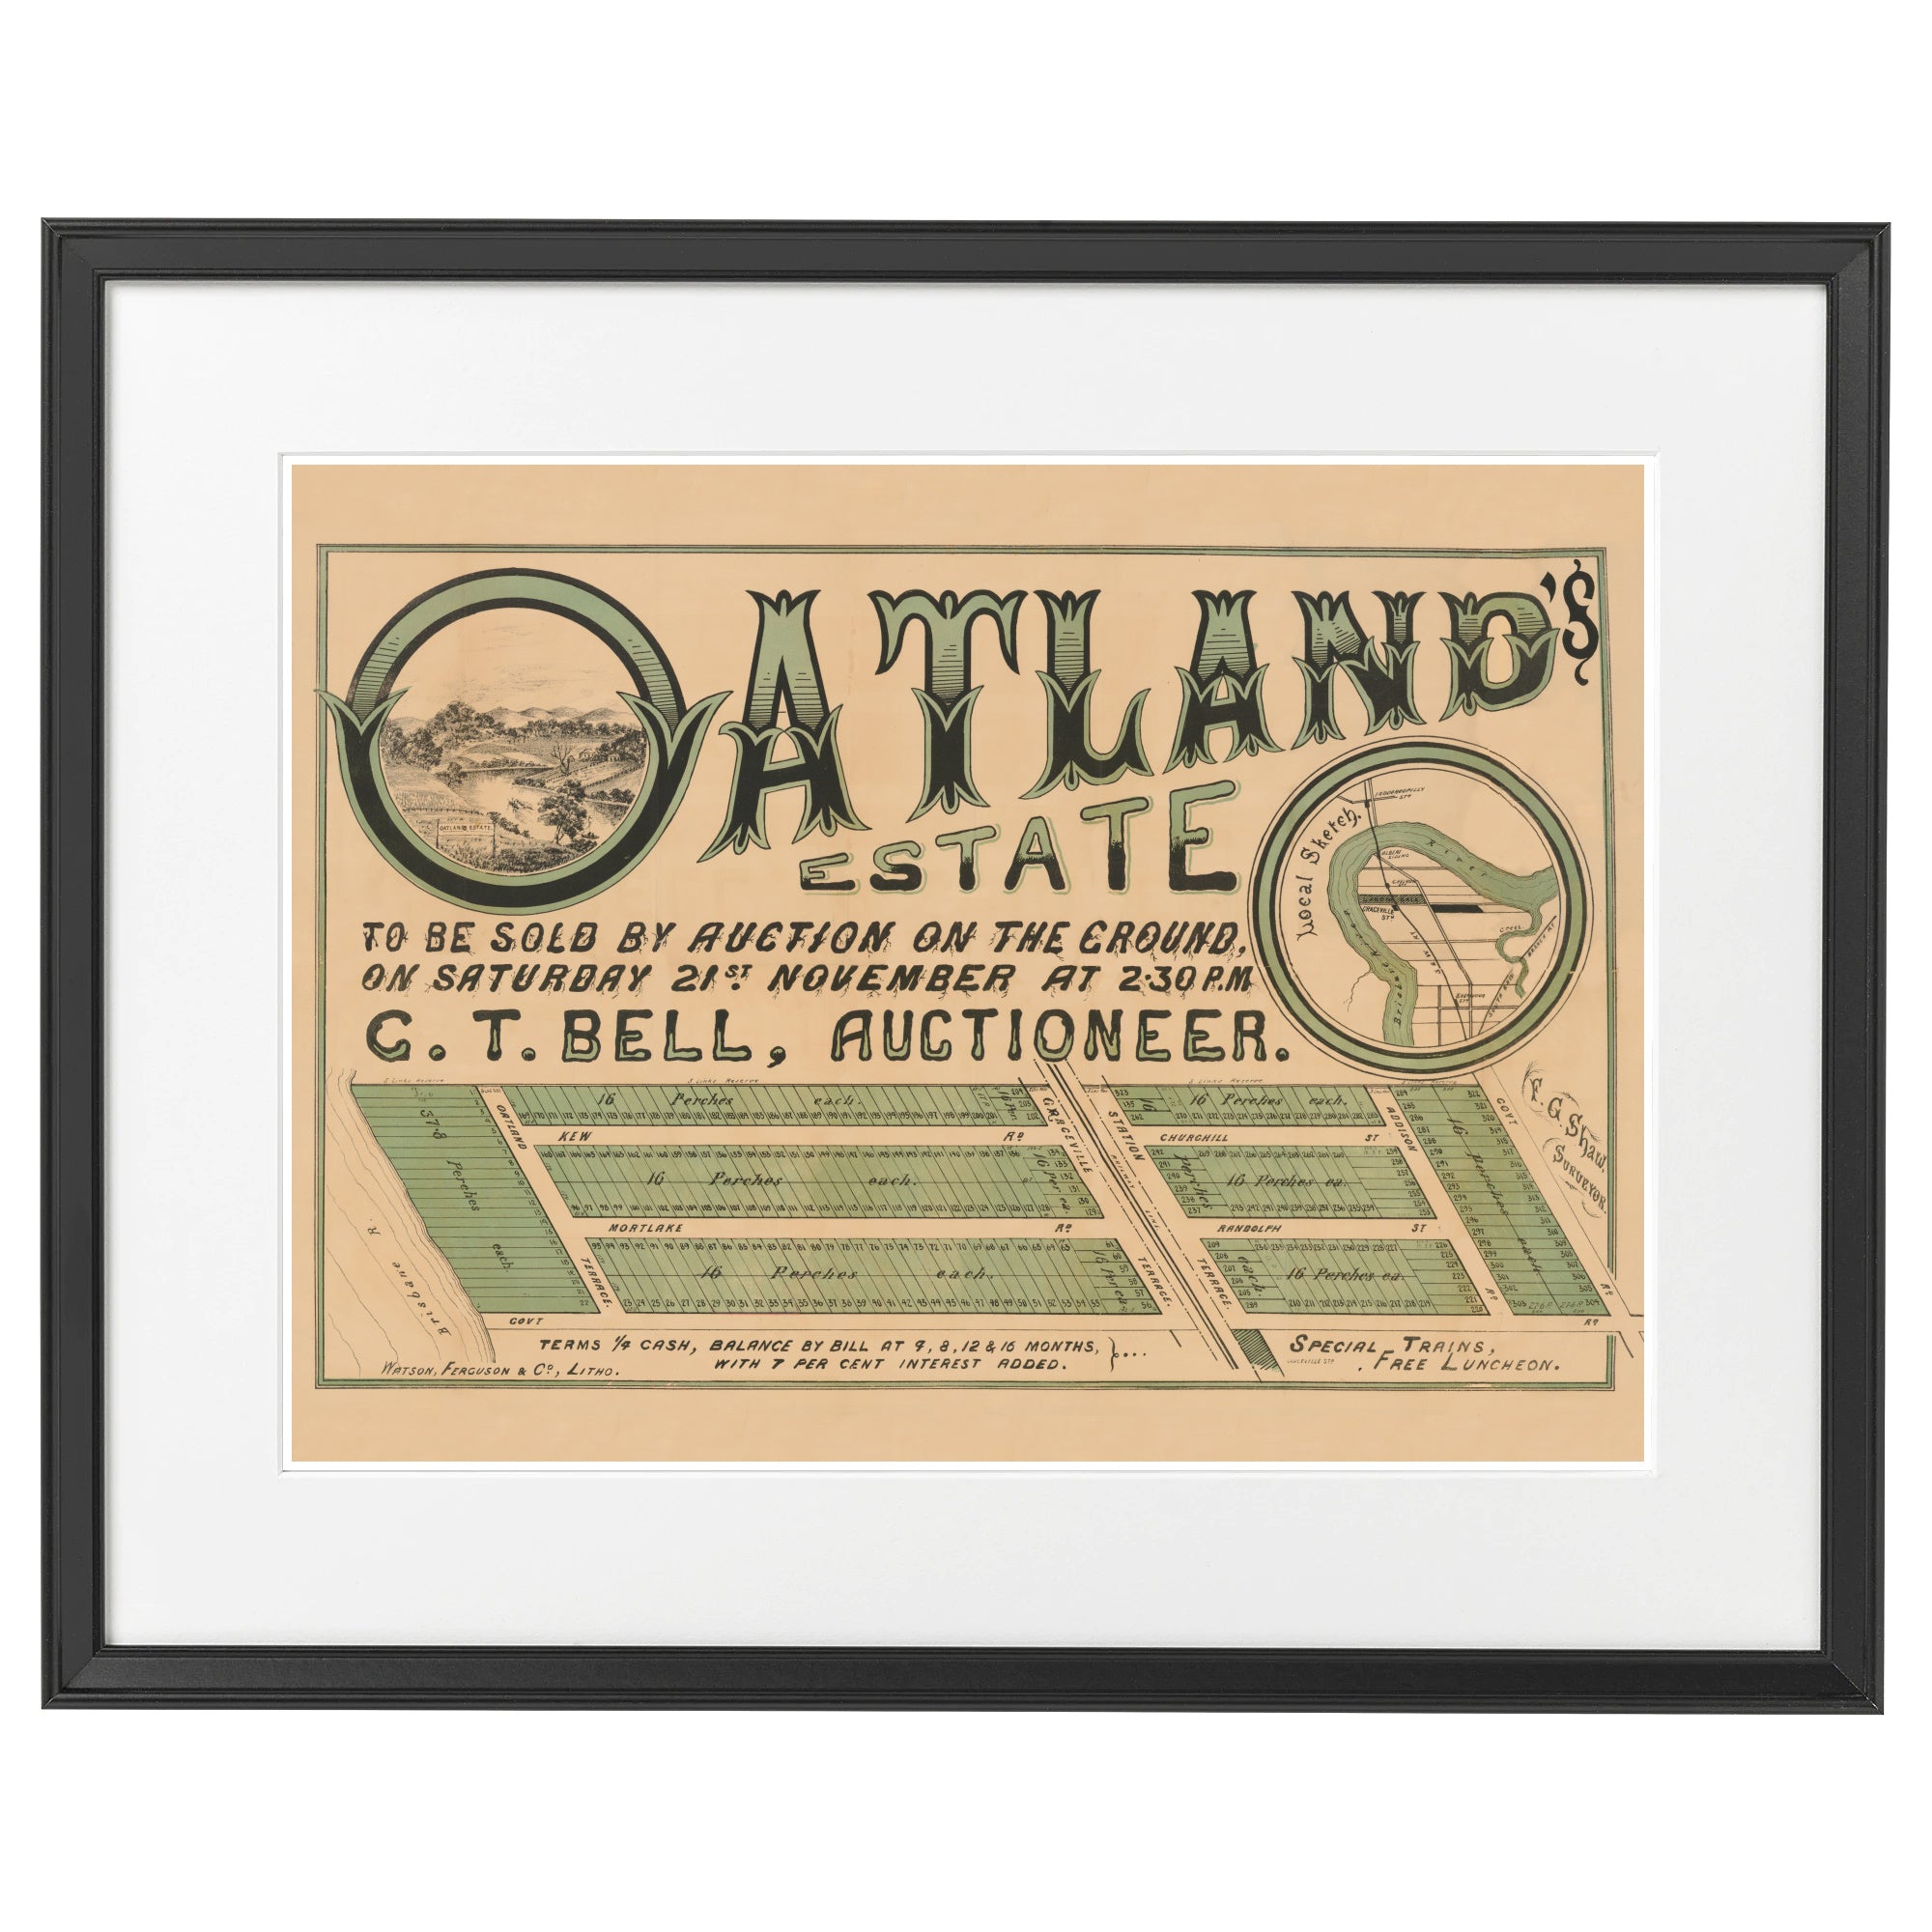 1885 Oatland's Estate - 138 years ago today